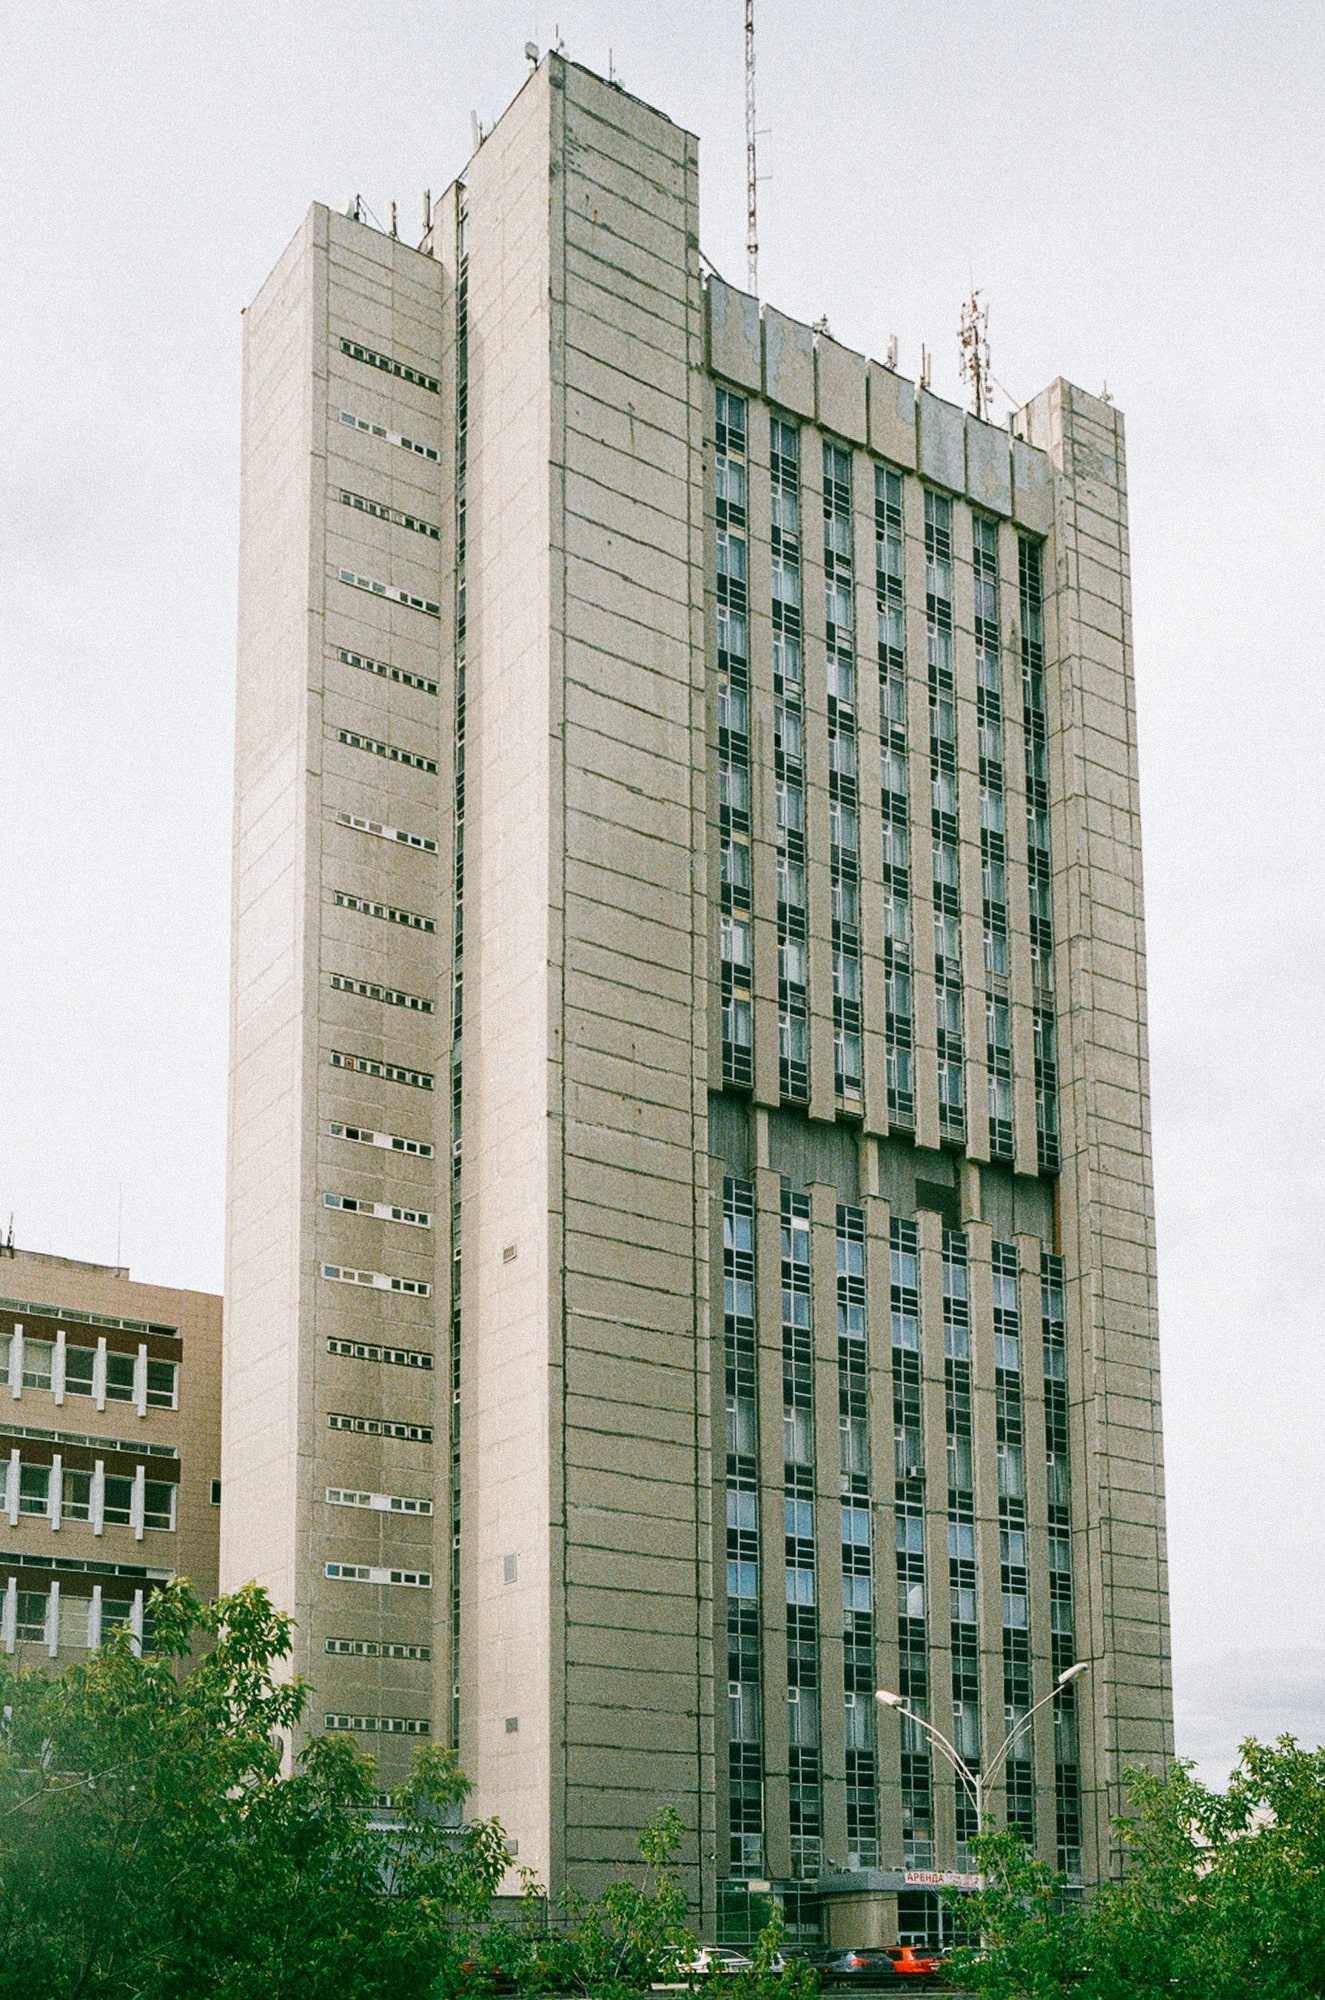 odernism. Modernist architecture of Yekaterinburg still forms the city’s landscape